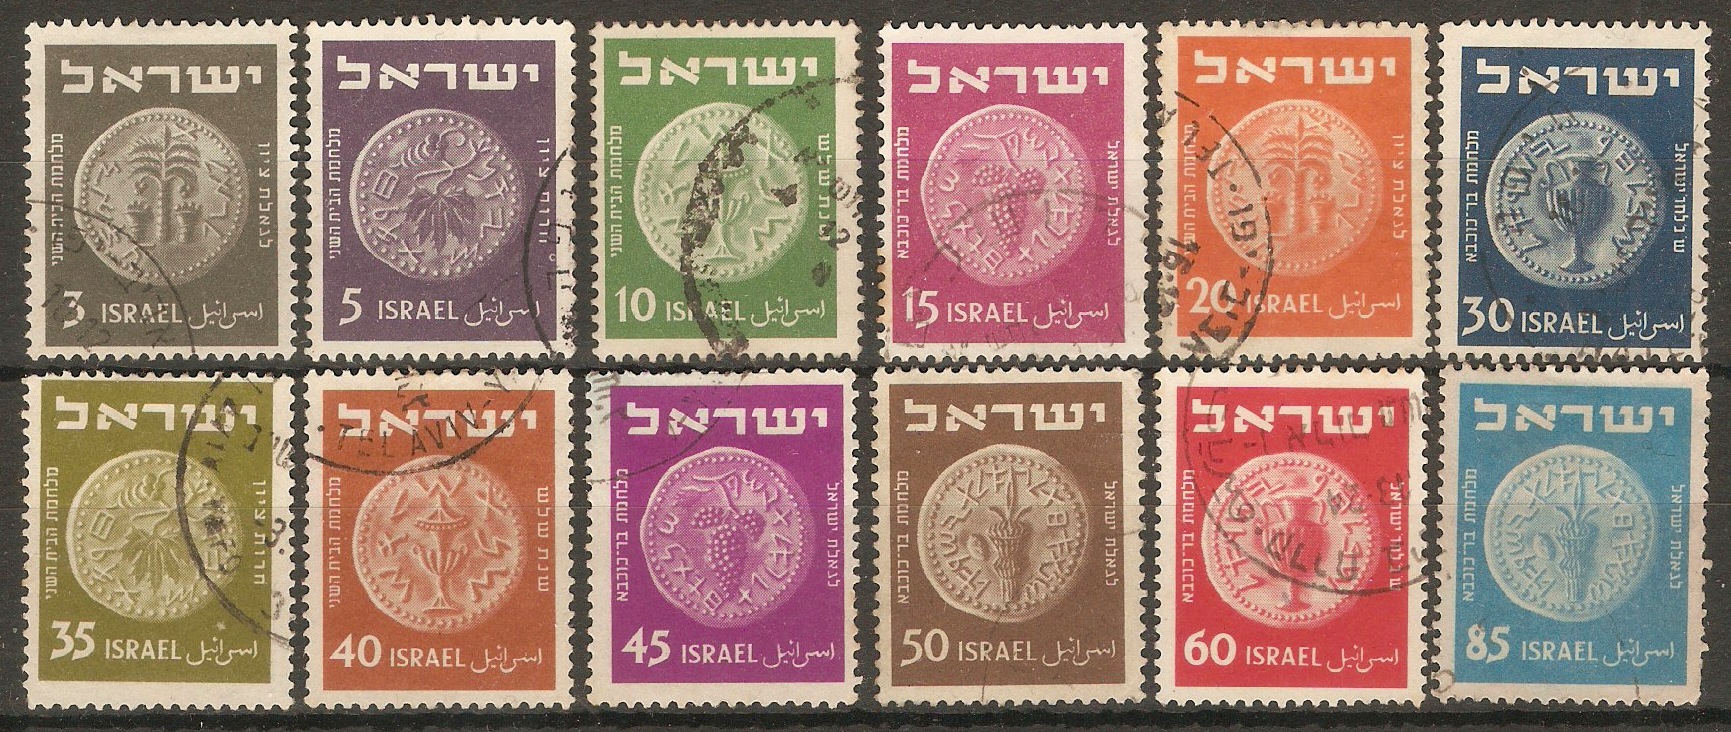 Israel 1950 Coins set. SG40-SG51.